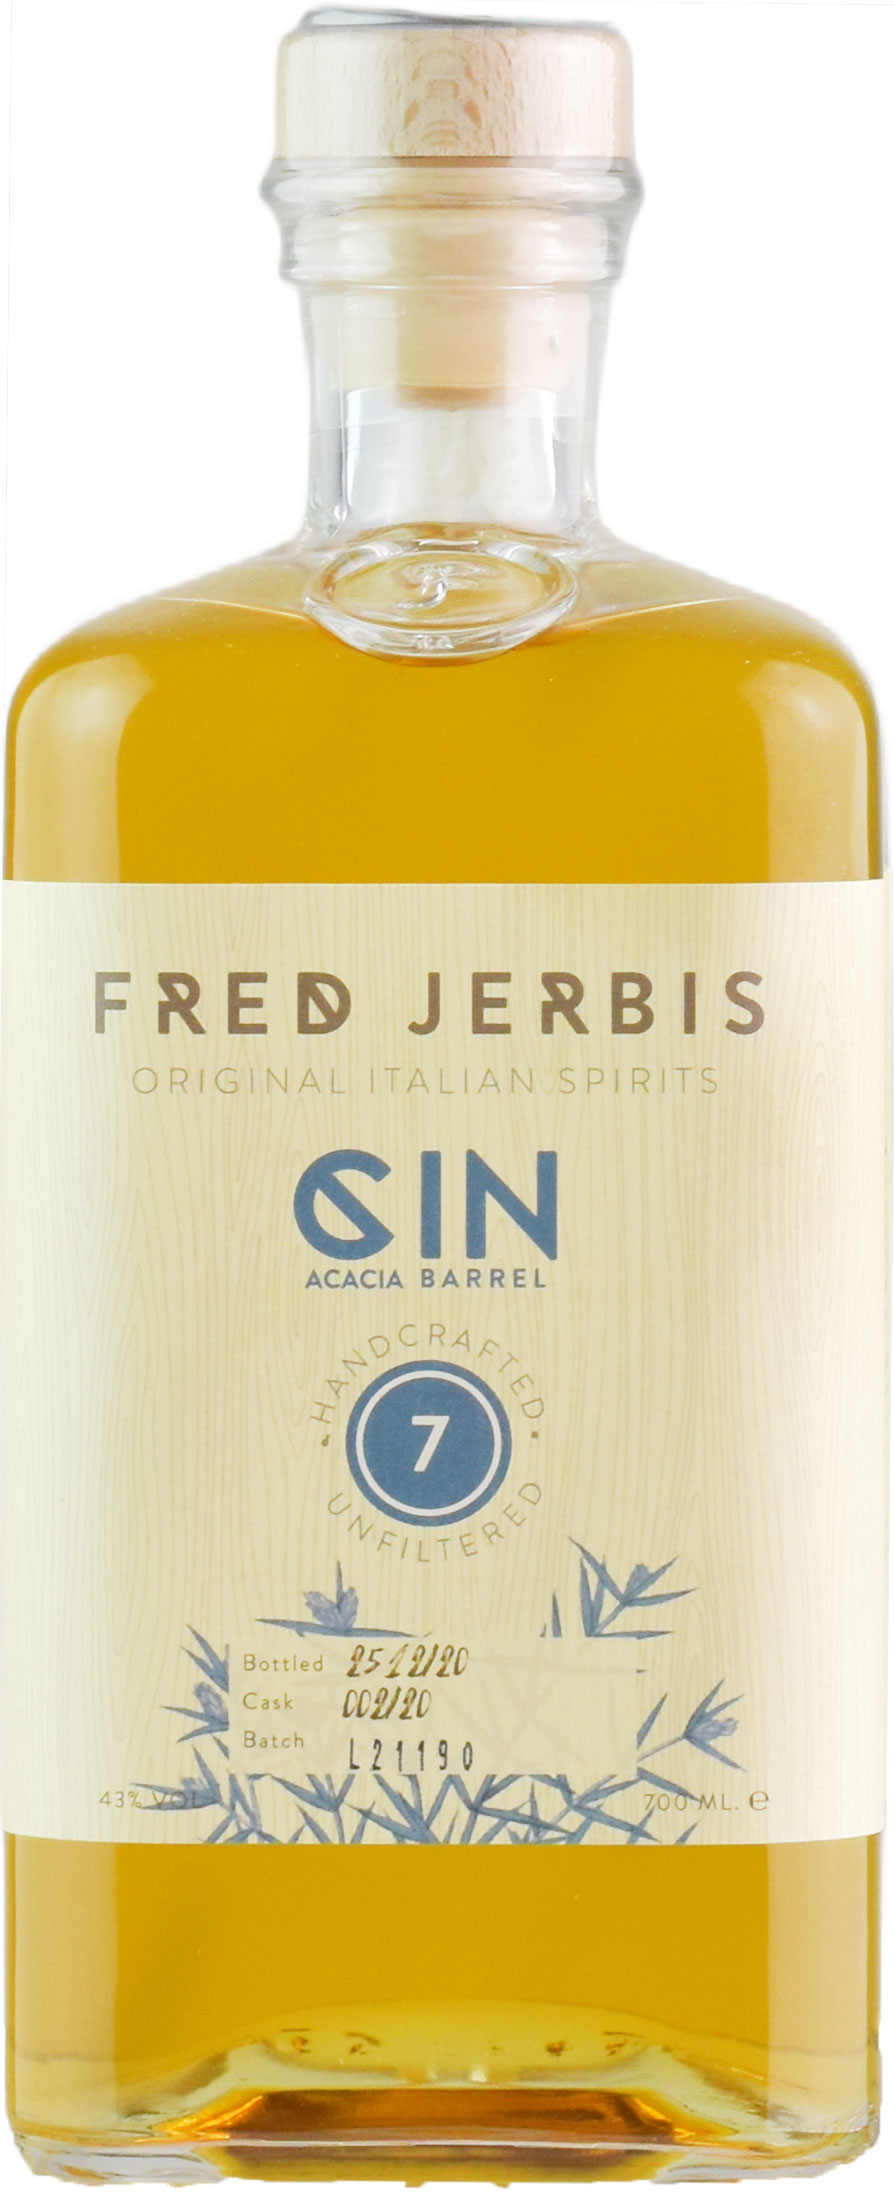 Fred Jerbis Single Barrel Gin 7